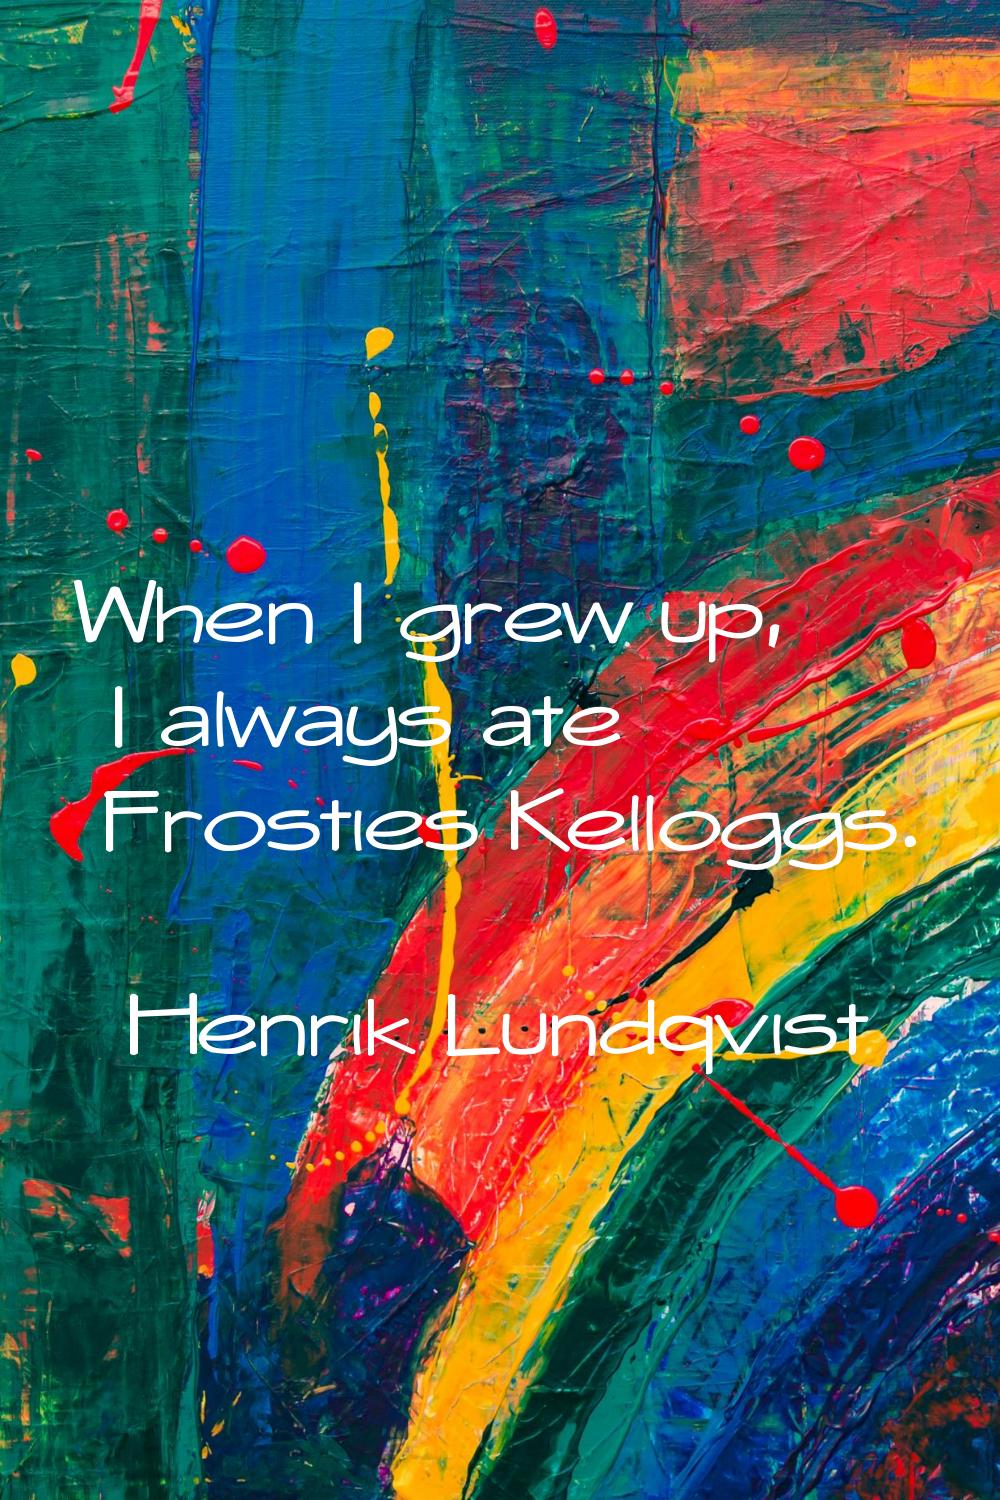 When I grew up, I always ate Frosties Kelloggs.